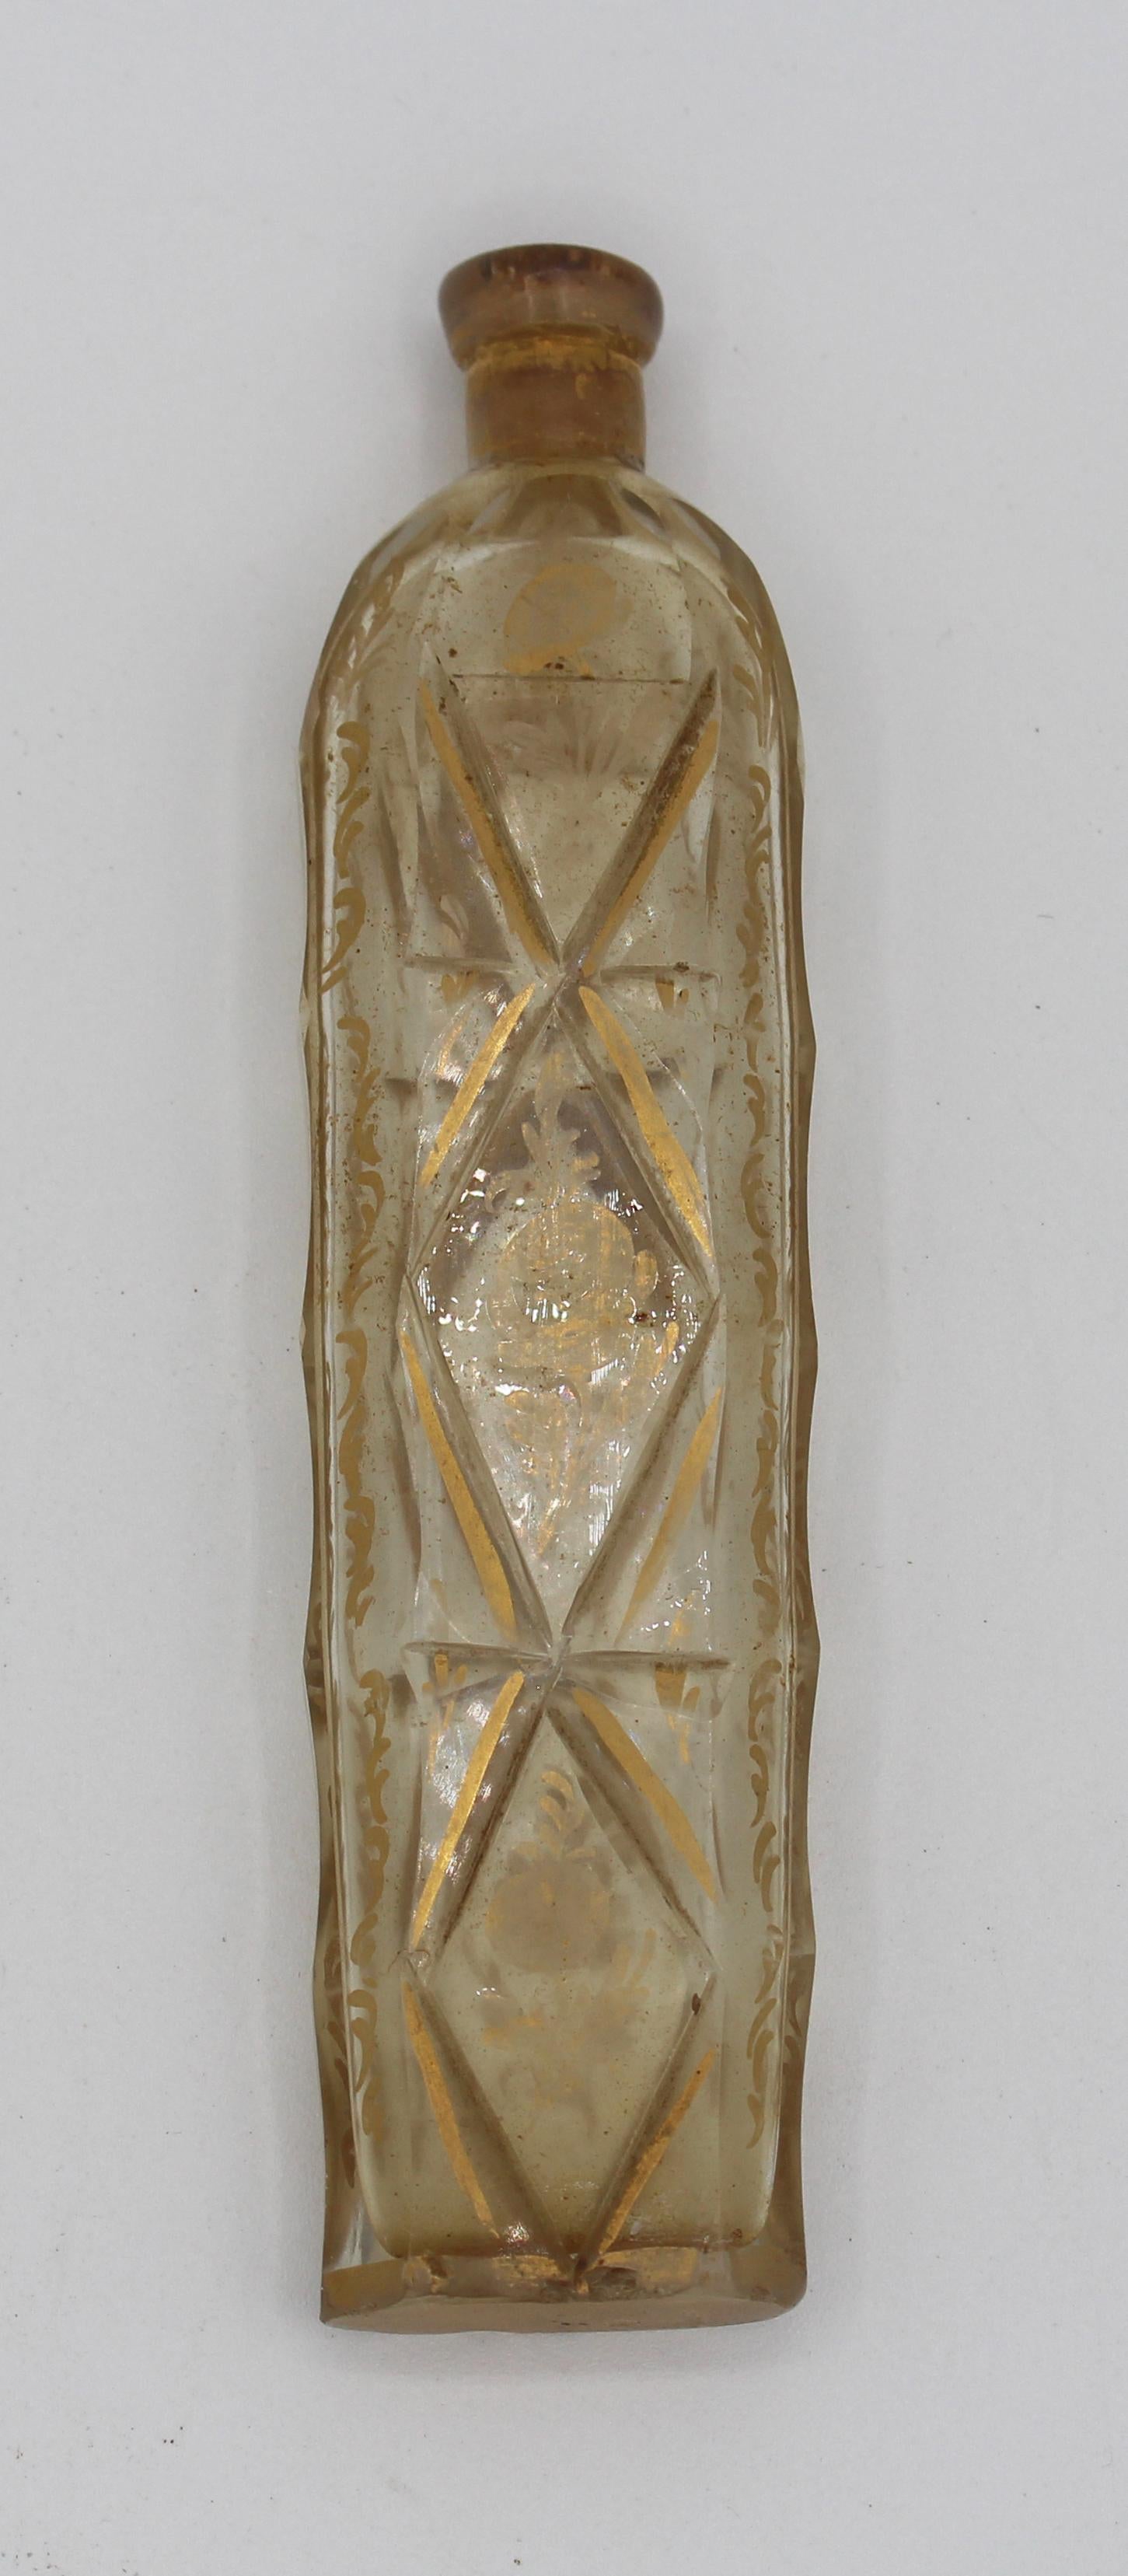 18th century faceted & gilt blown glass perfume bottle; England. Lacks stopper/cork. 5 1/2